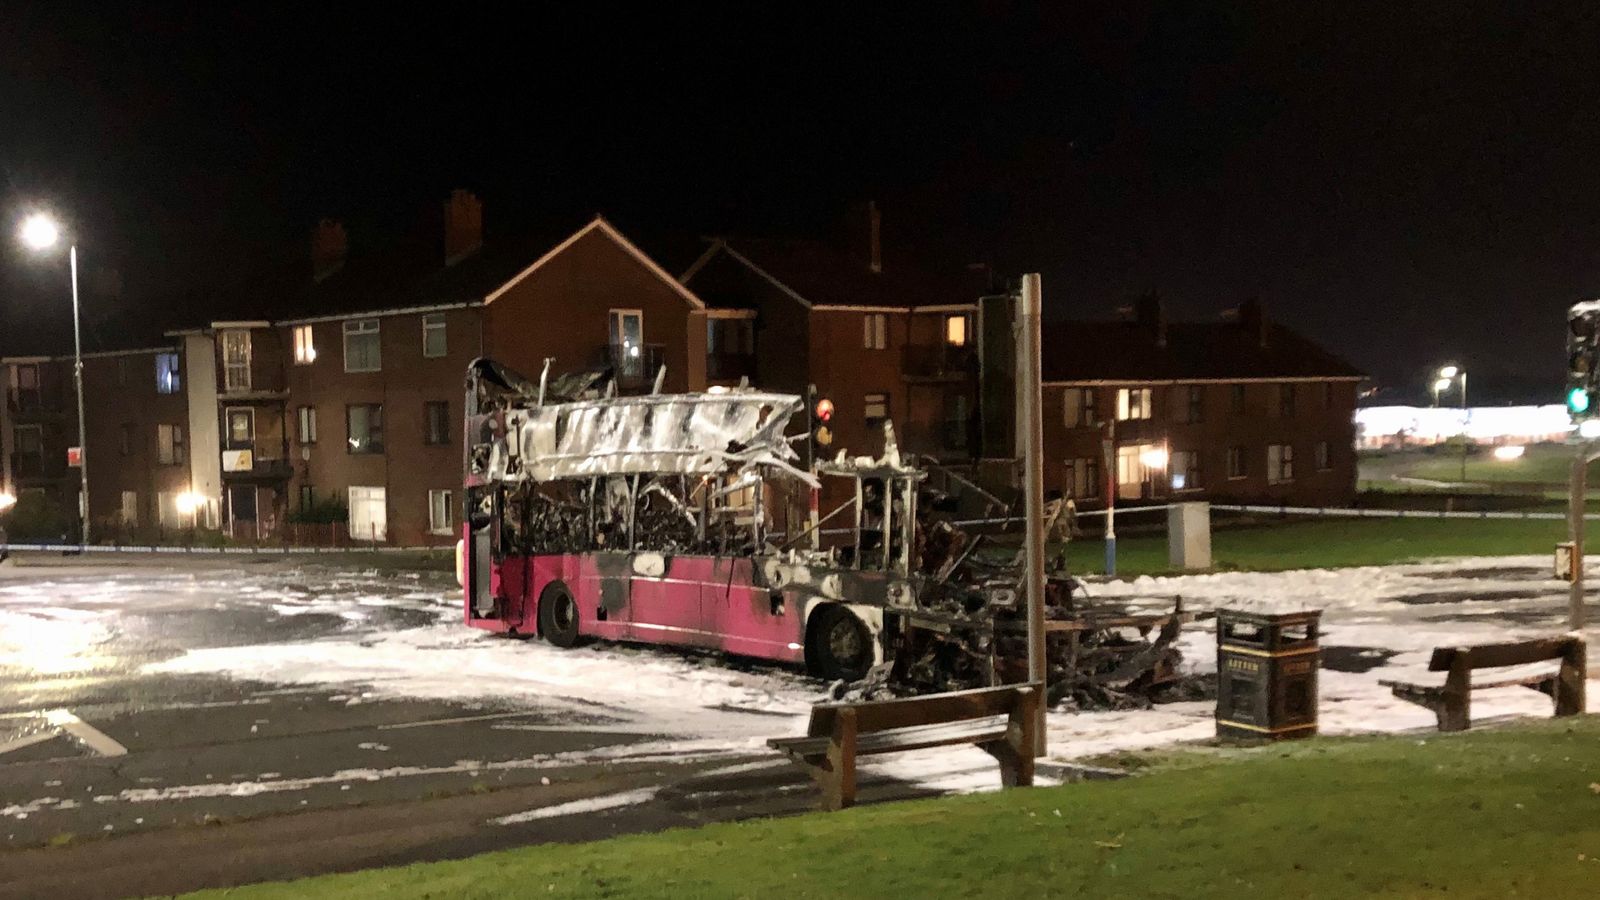 Irlandia Utara: Bus dibajak dan dibakar di dekat kawasan loyalis di pinggiran Belfast |  Berita Inggris